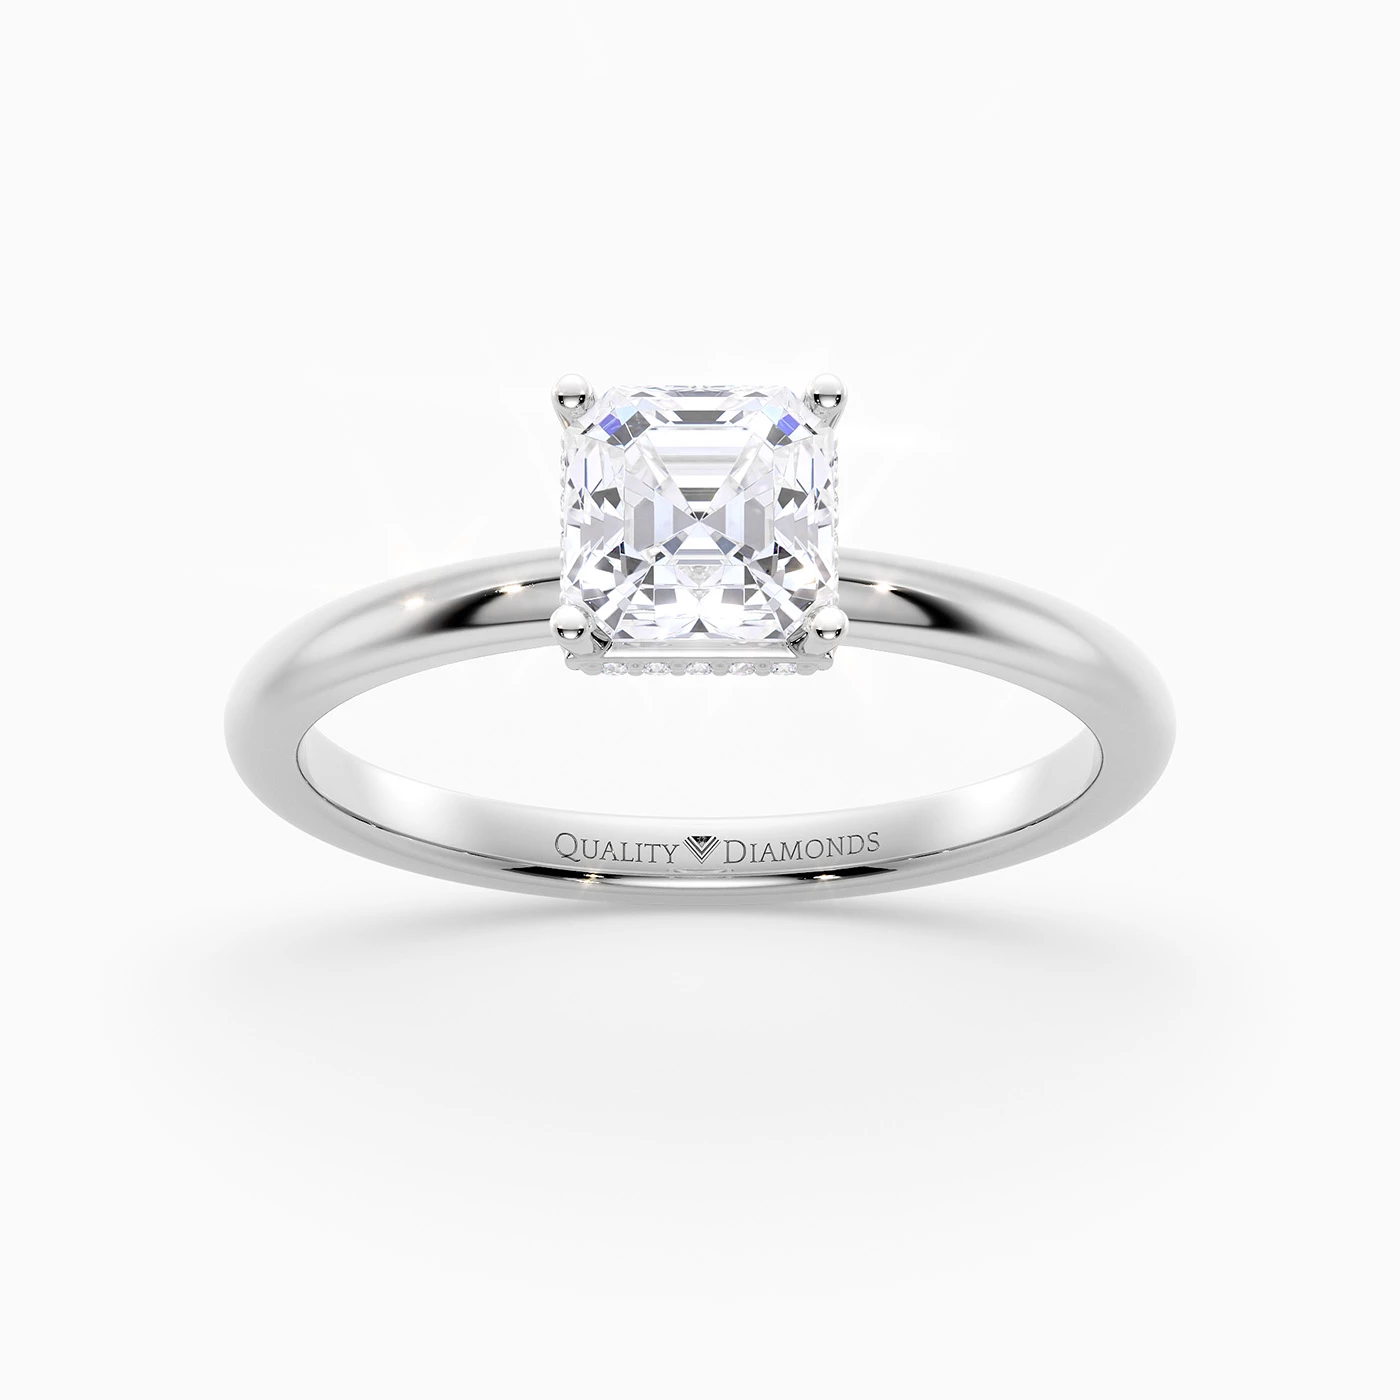 Asscher Liraz Hidden Halo Diamond Ring in 18K White Gold